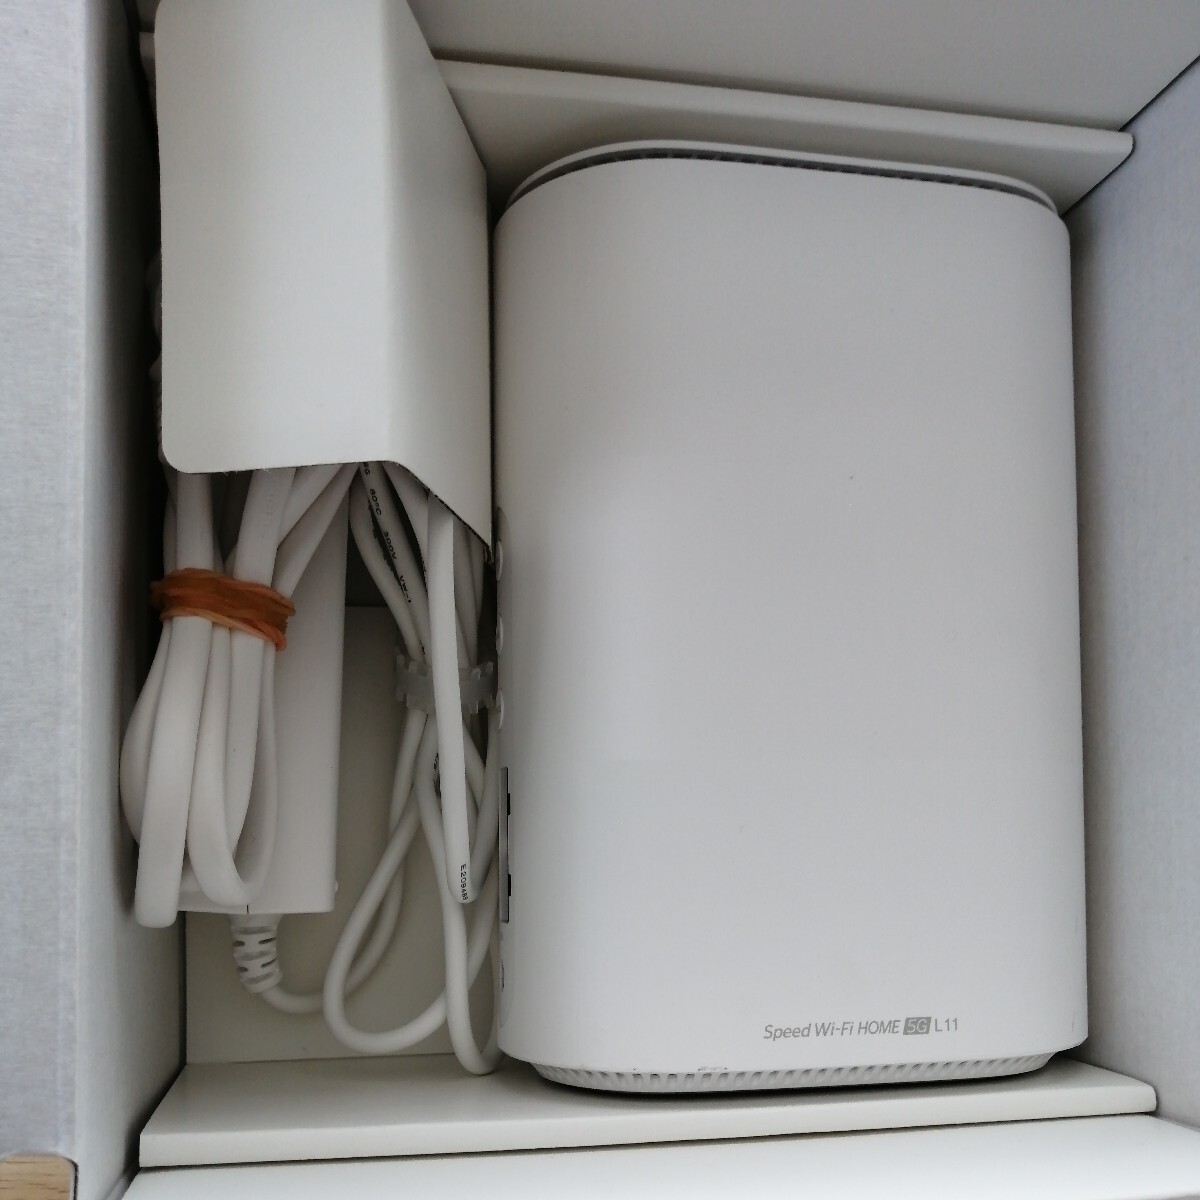 AU Speed Wi-Fi HOME 5G L11 ZTR01SWA White ホワイト ルーター _画像3